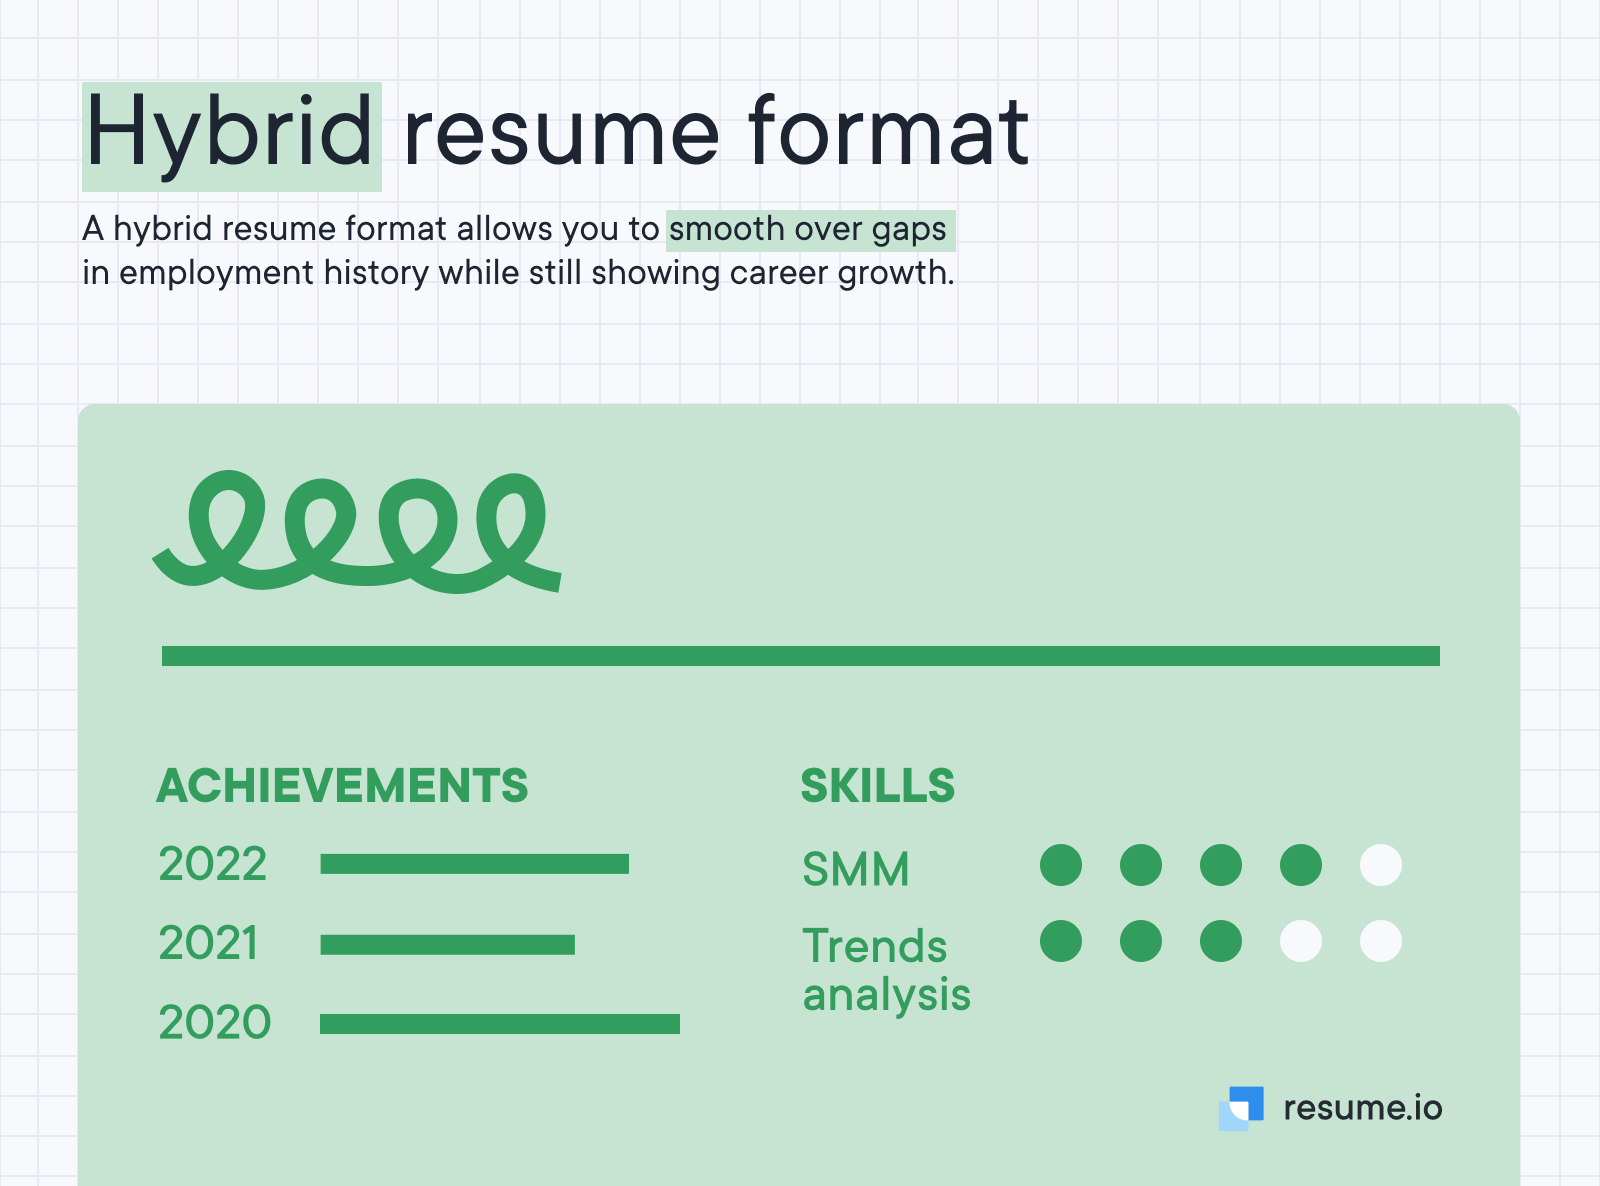 Hybrid resume format